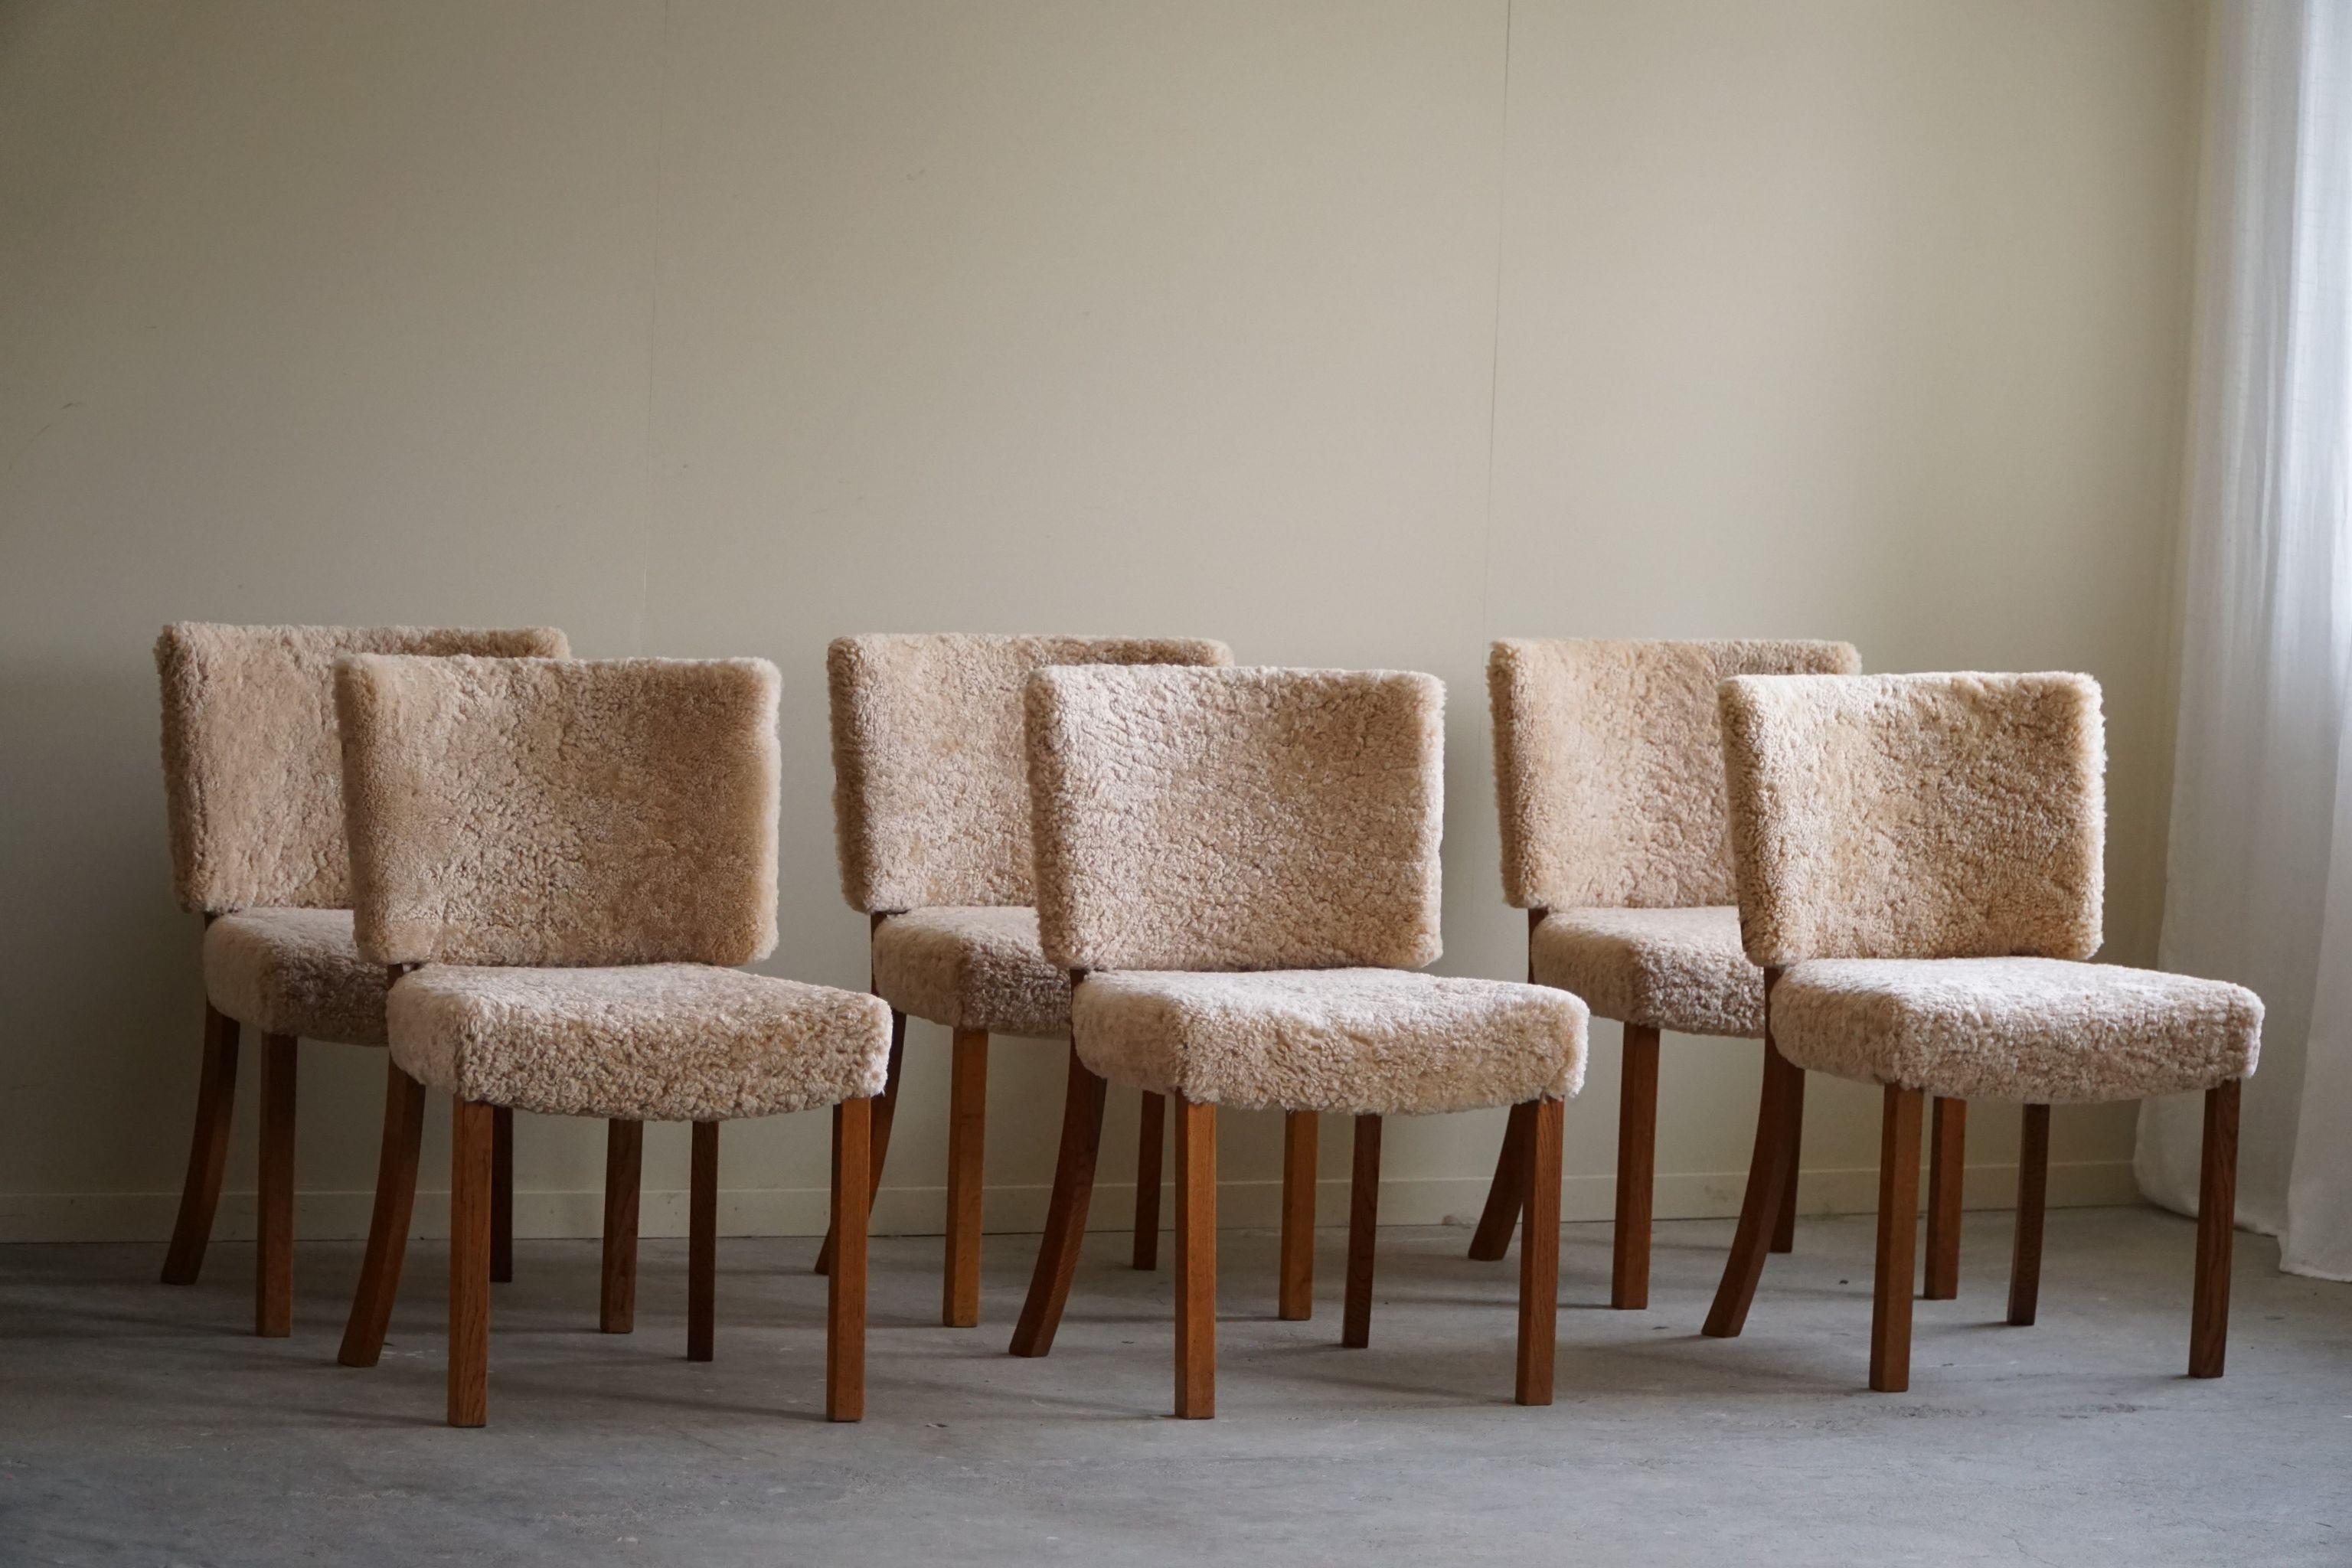 A set of 8 Dining Chairs in Oak and Lambswool, Danish Modern, Kaj Gottlob, 1950s For Sale 5